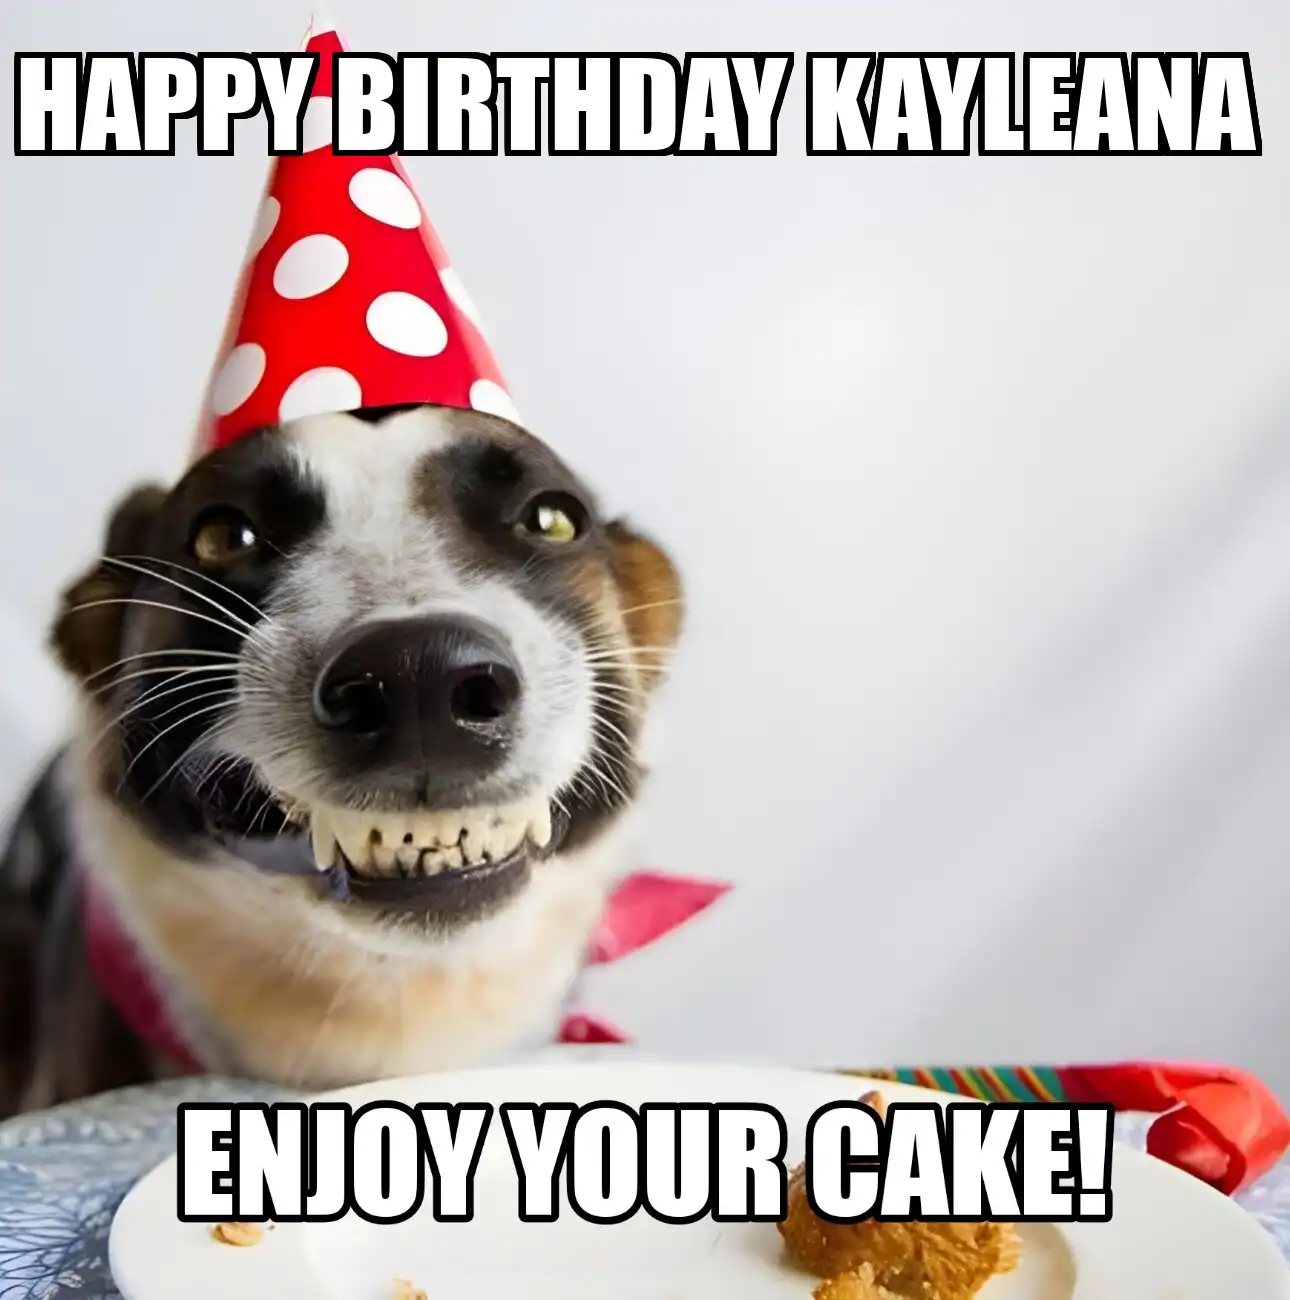 Happy Birthday Kayleana Enjoy Your Cake Dog Meme